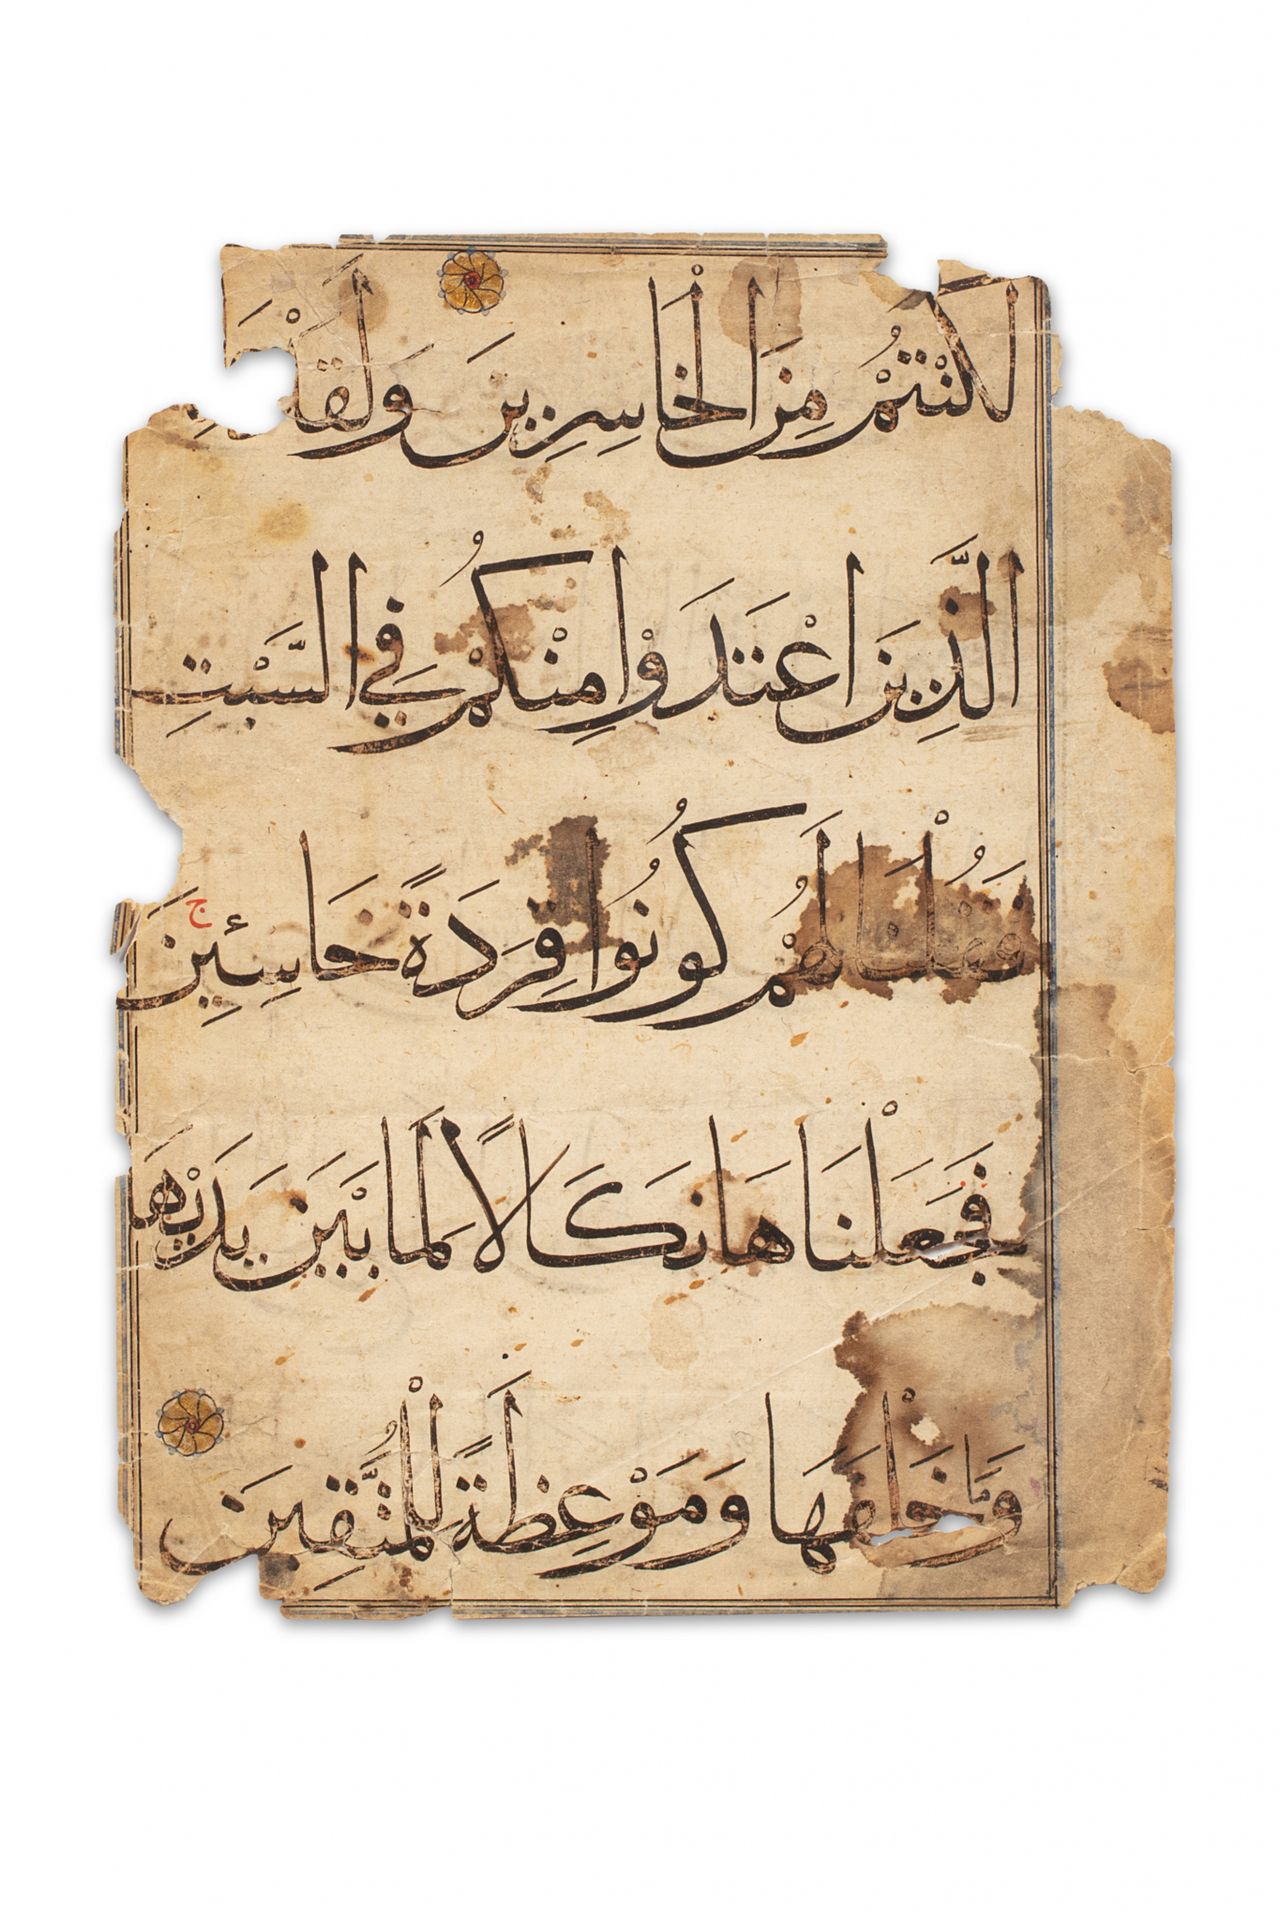 Folio de Coran mamlouque 埃及，15世纪

一张大的《古兰经》叶子，用黑色墨水写成 "muhaqqaq"，每页五行。文字周围有黑色、金色&hellip;